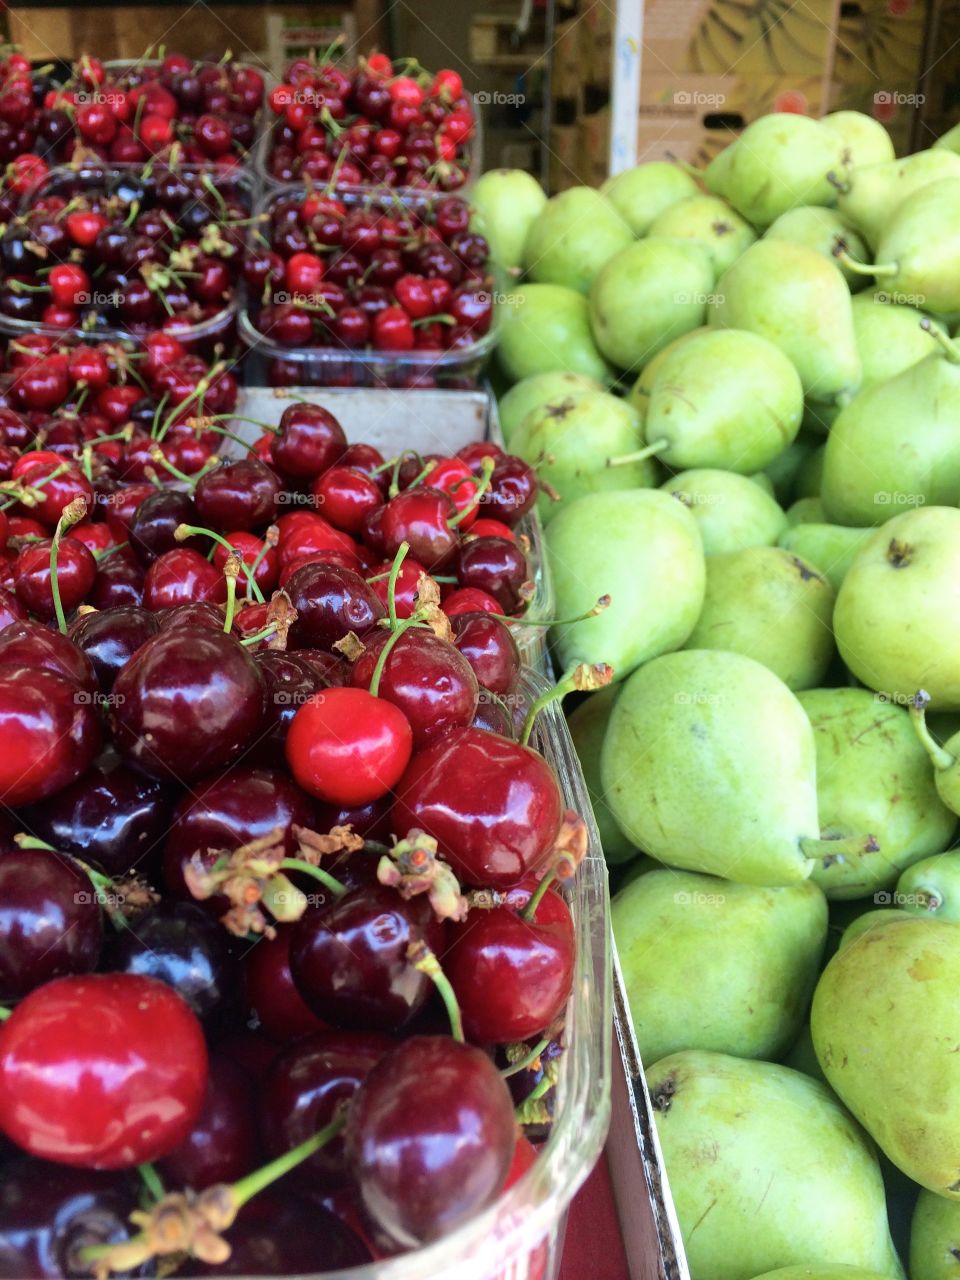 Cherries and pears at Mahane Yehuda market in